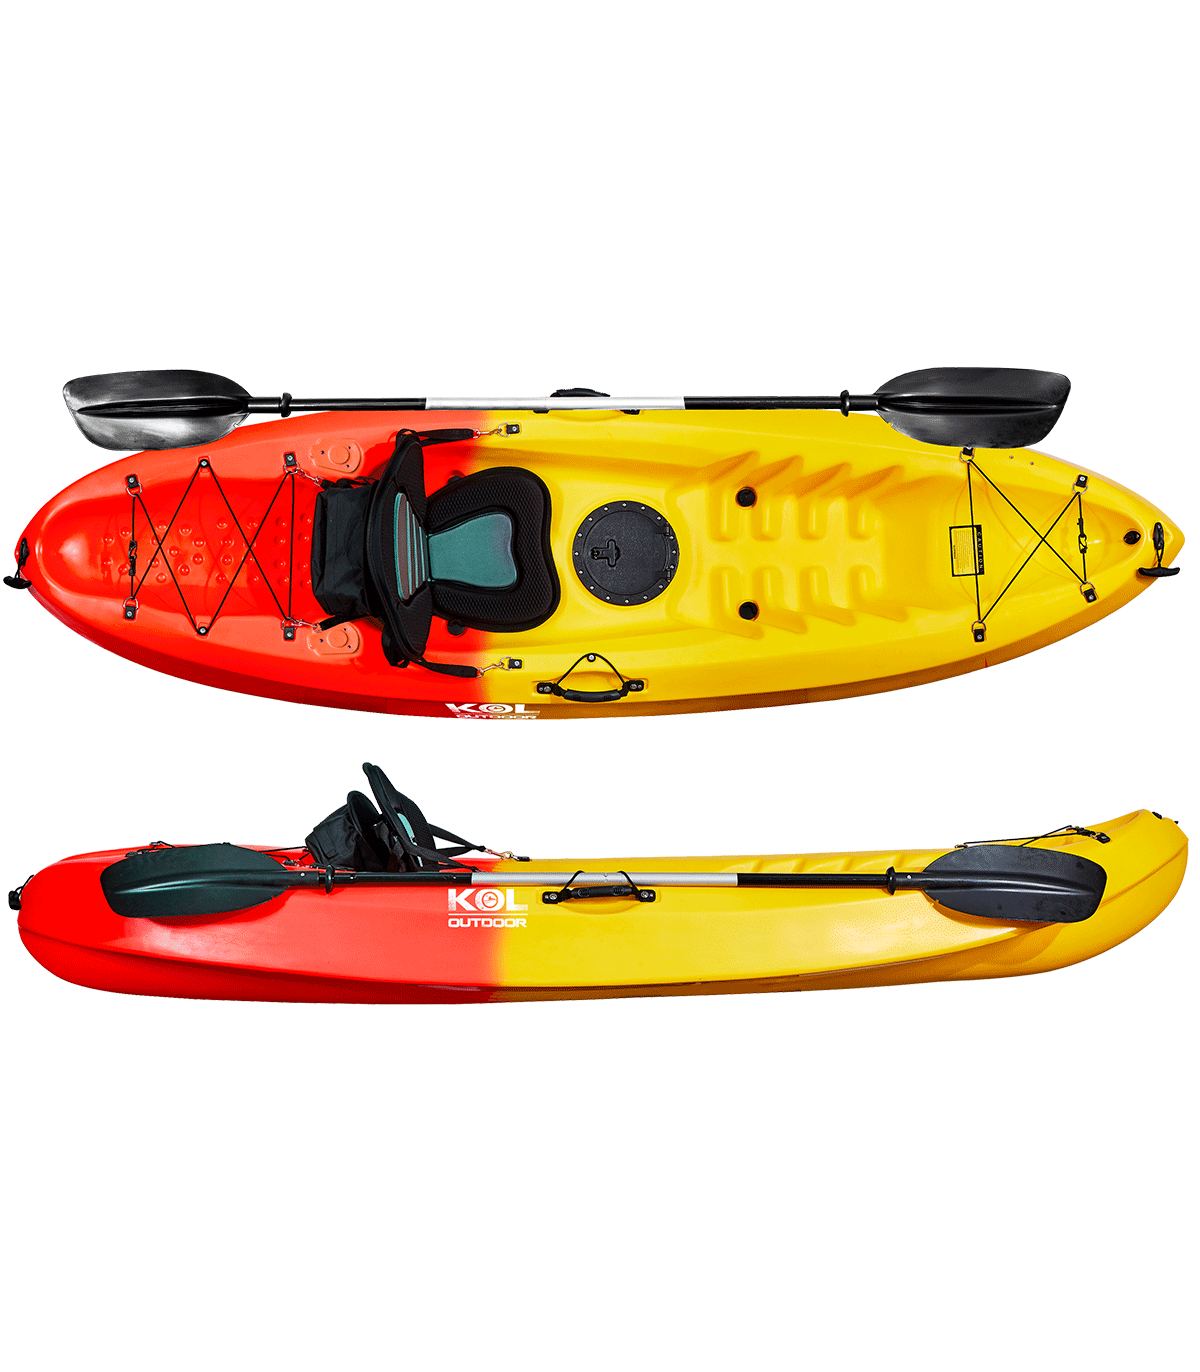 Kayak De Recreo Individual Kol Outdoor Mola (270x80 Cm)